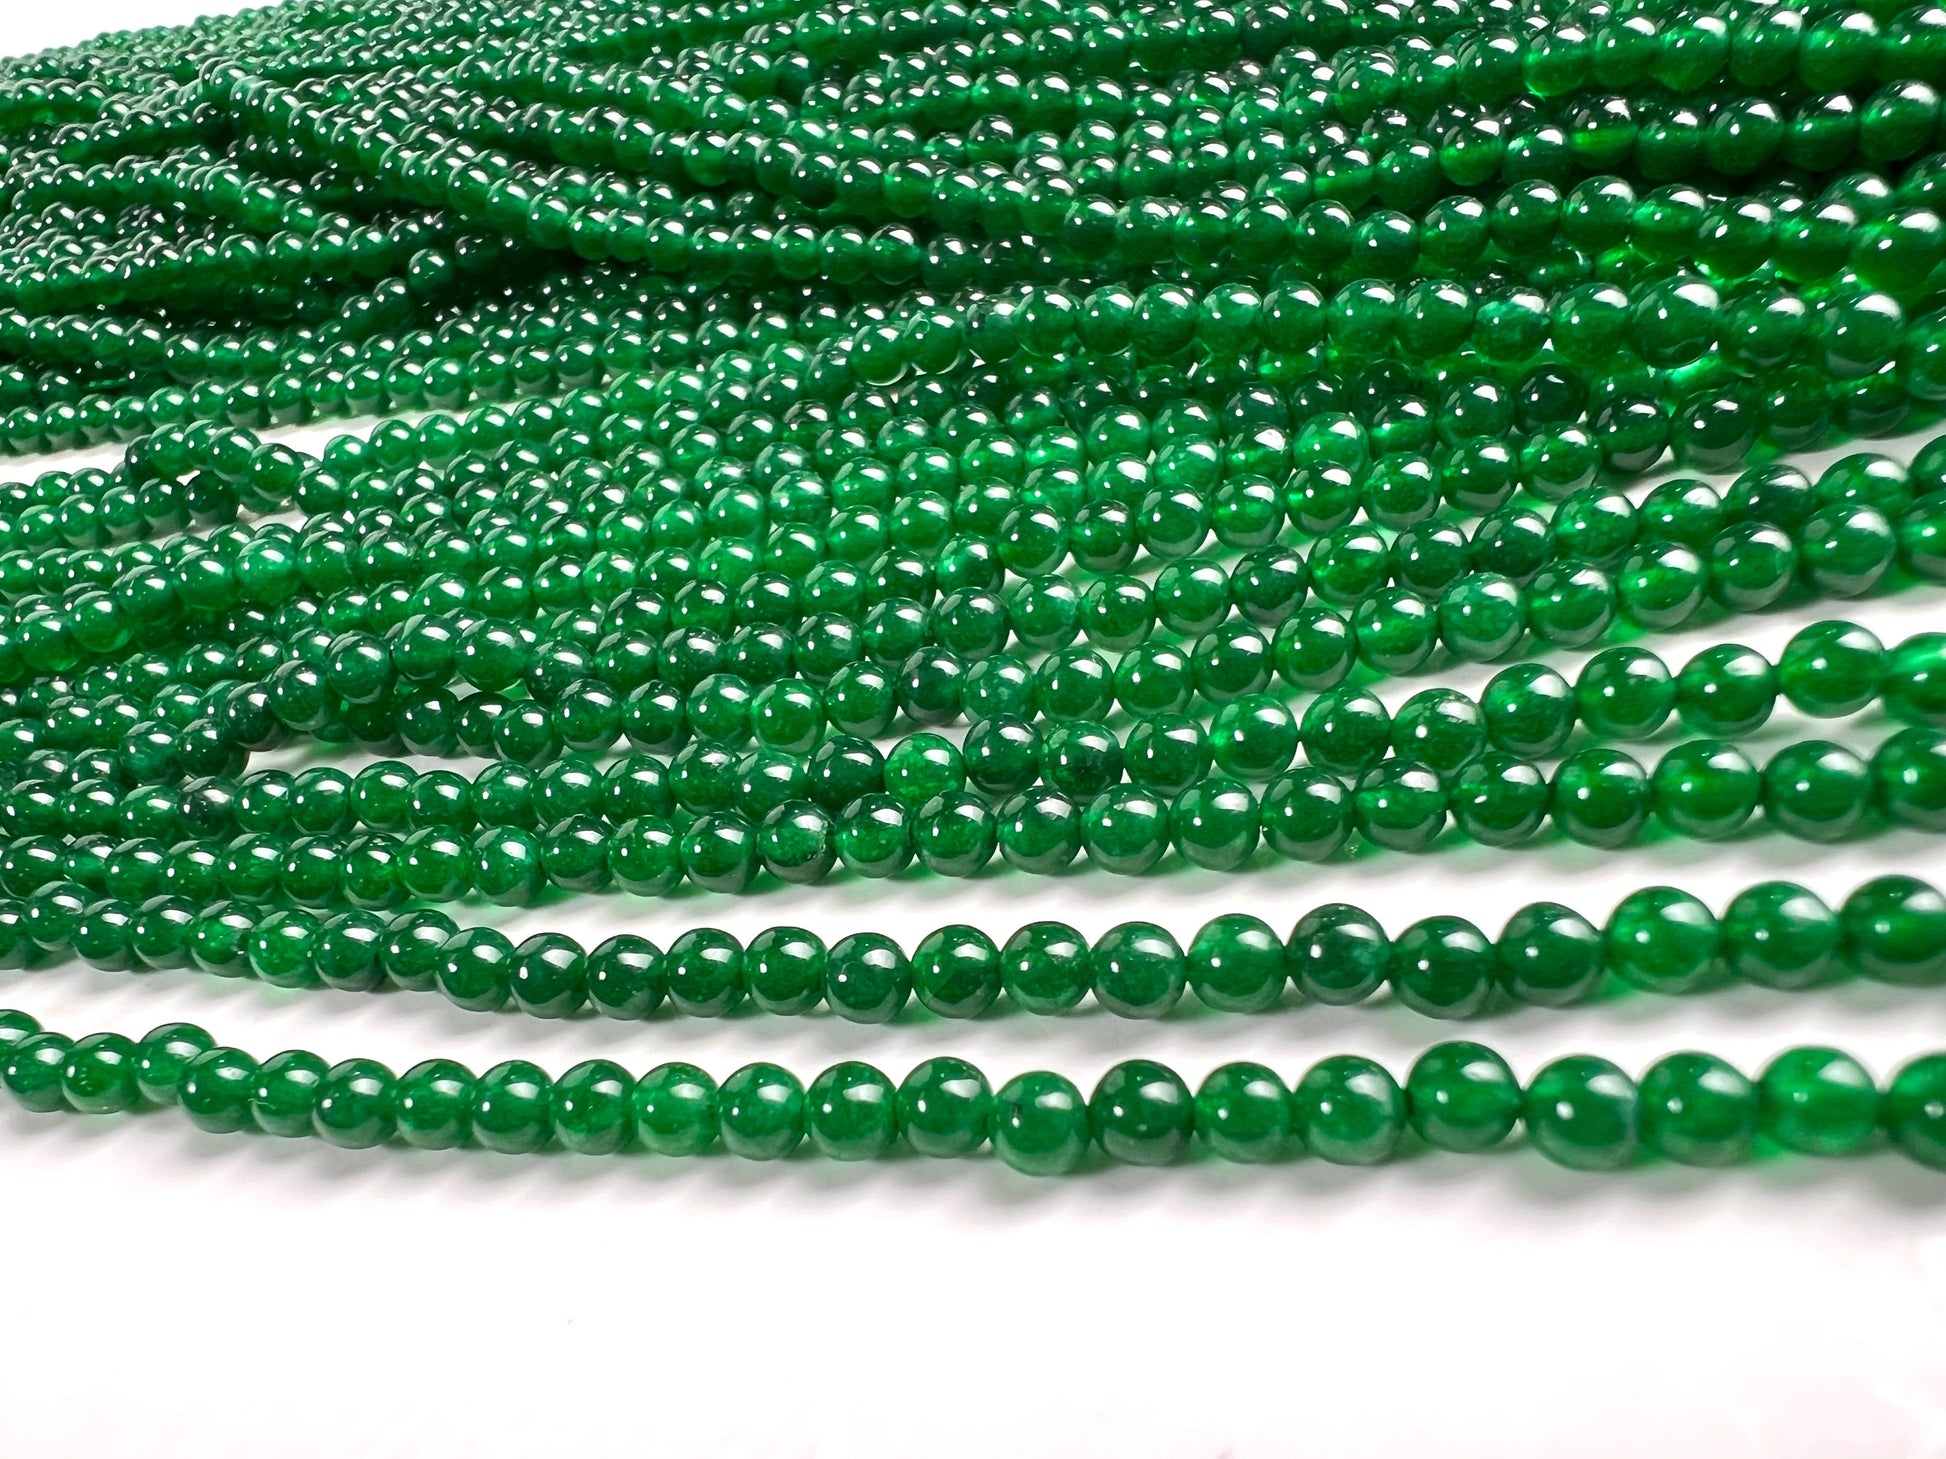 Canada jade 3mm smooth round bead 15” long for jewelry making dark green gemstone.